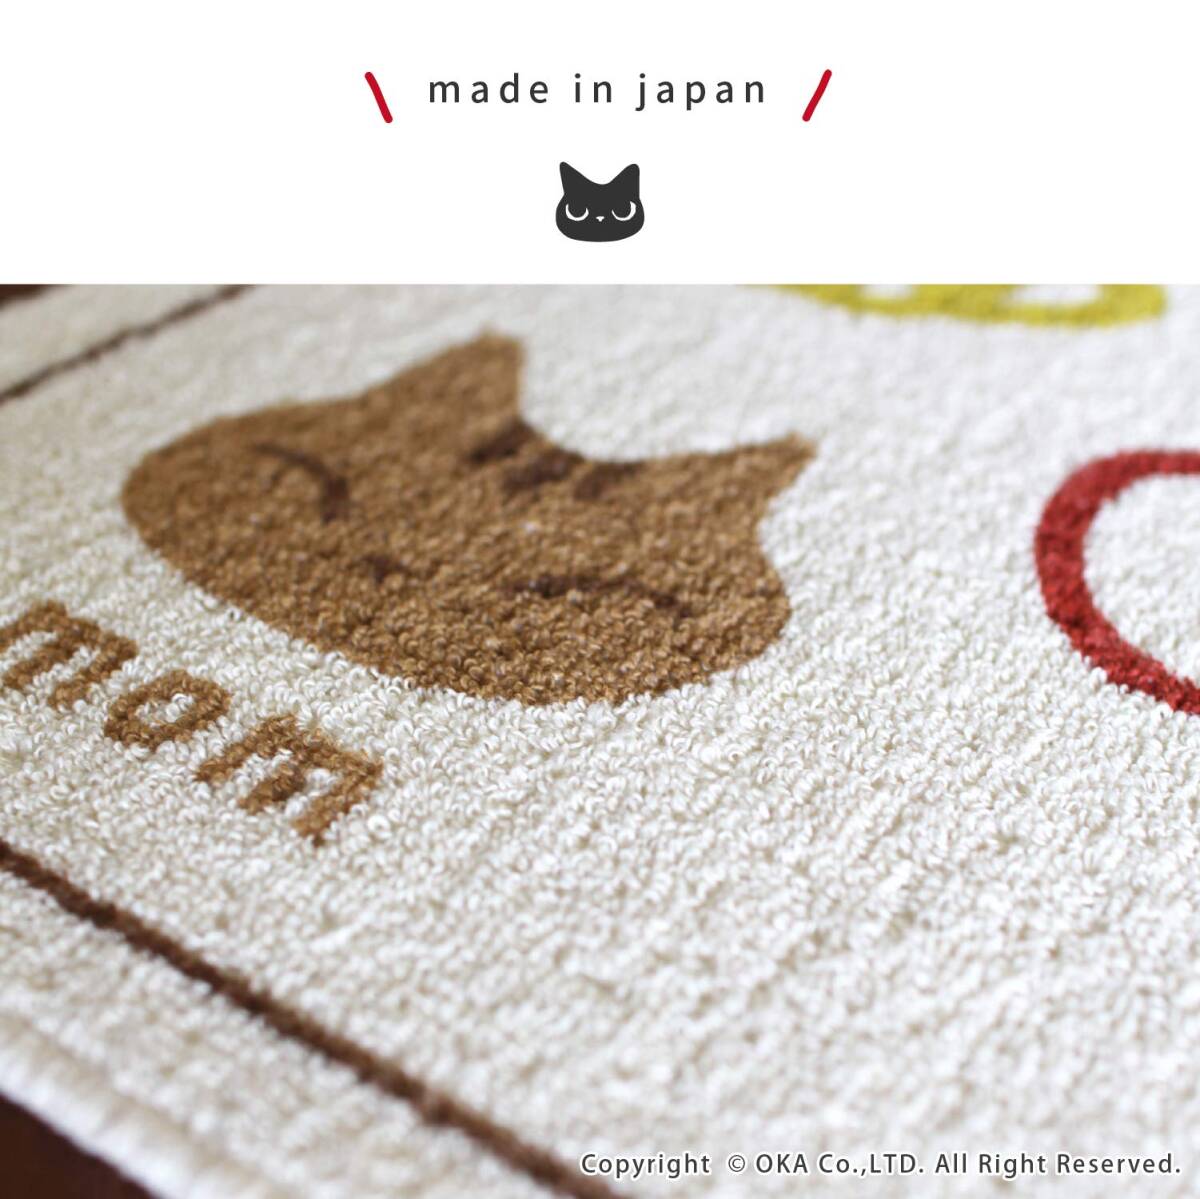 oka(OKA) Kuroneko kitchen mat approximately 45cm×180cm ( made in Japan ) Brown 4548622624243